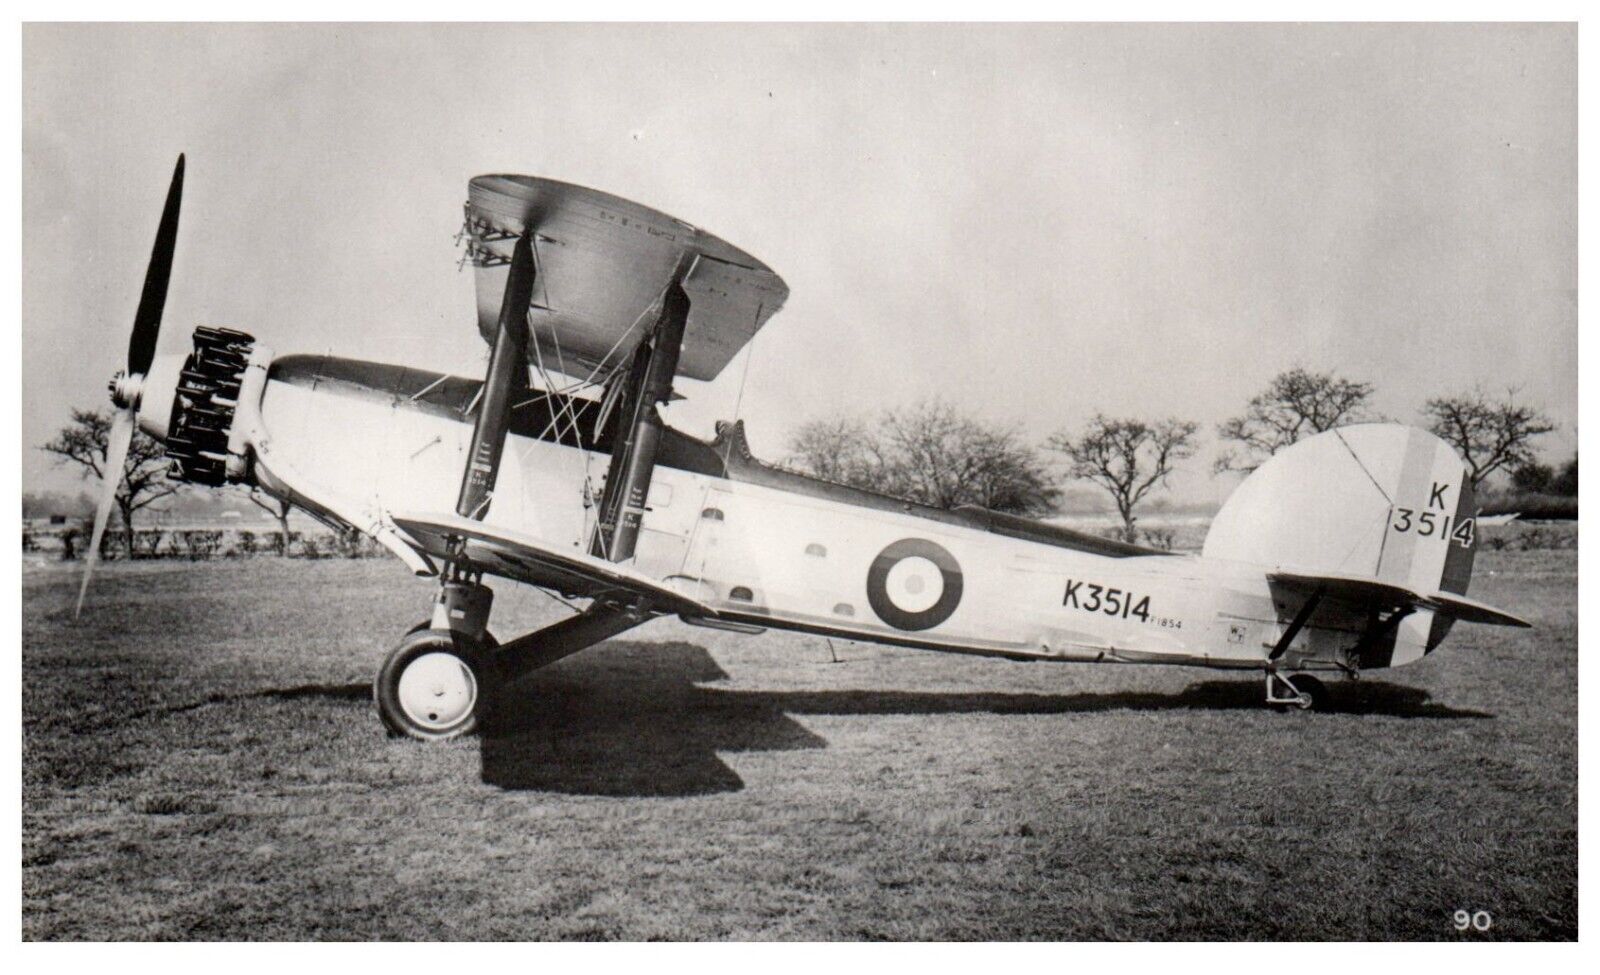 Fairey Seal K3514 Biplane Airplane Vintage Photograph Print 5.5x3.5